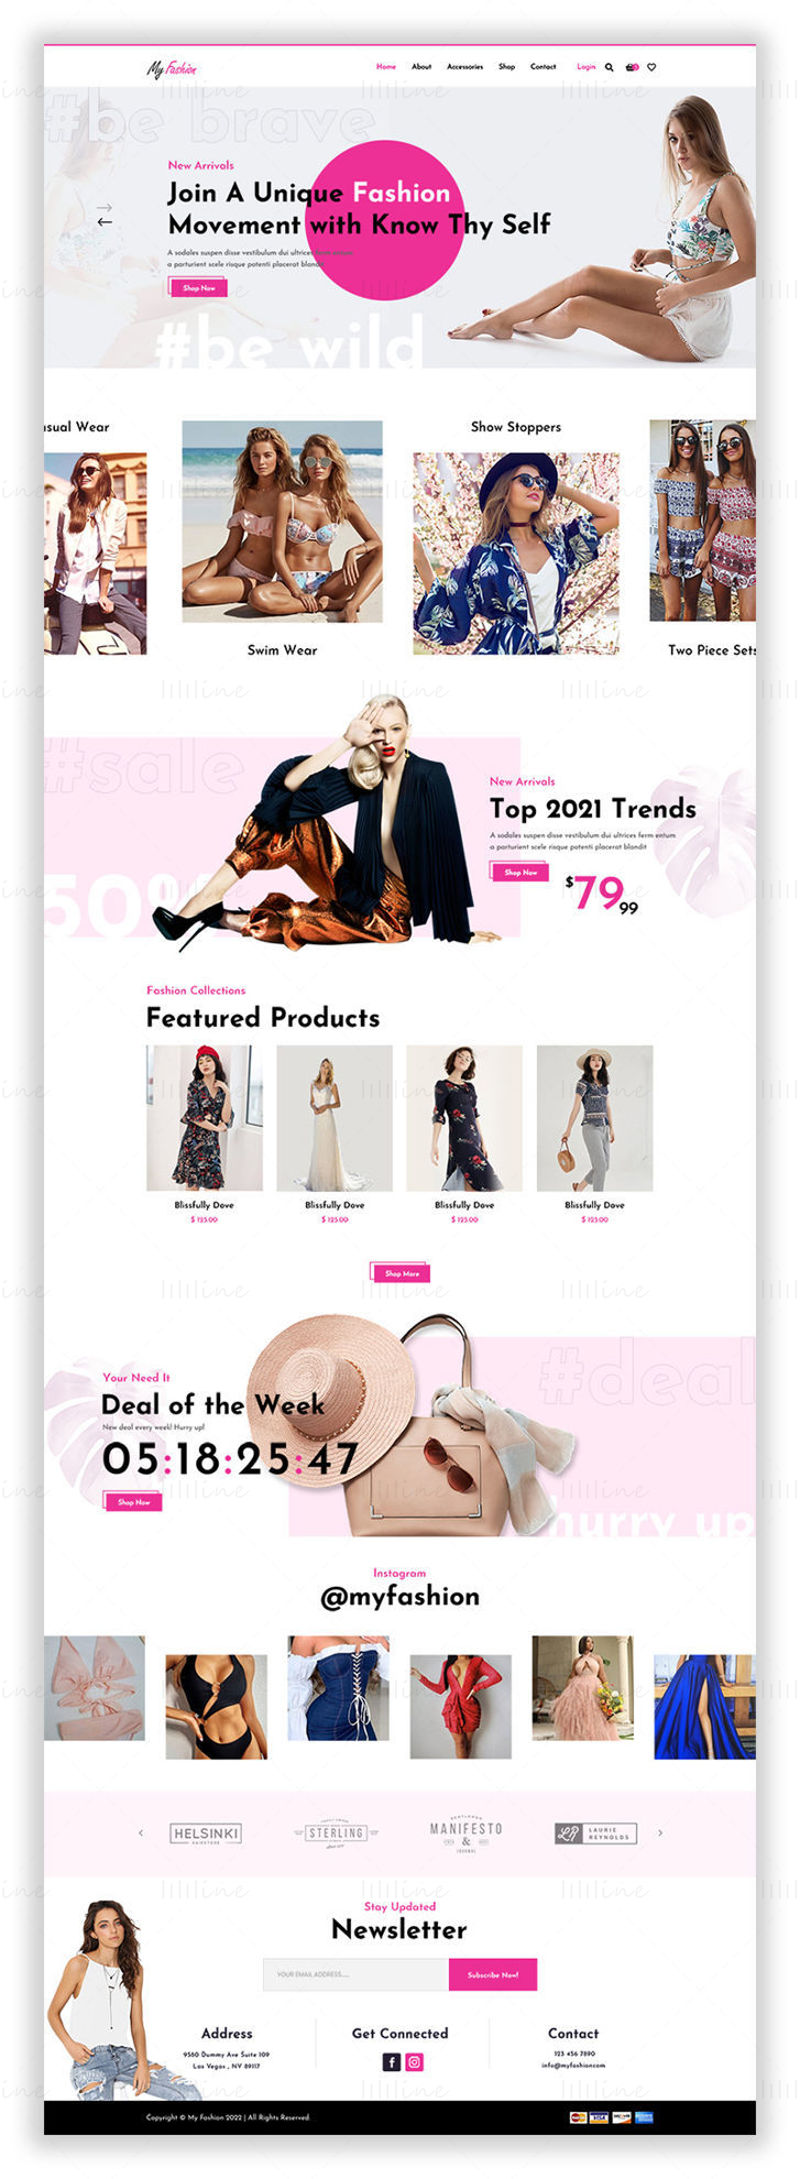 Plantilla PSD para sitio web de comercio electrónico de moda